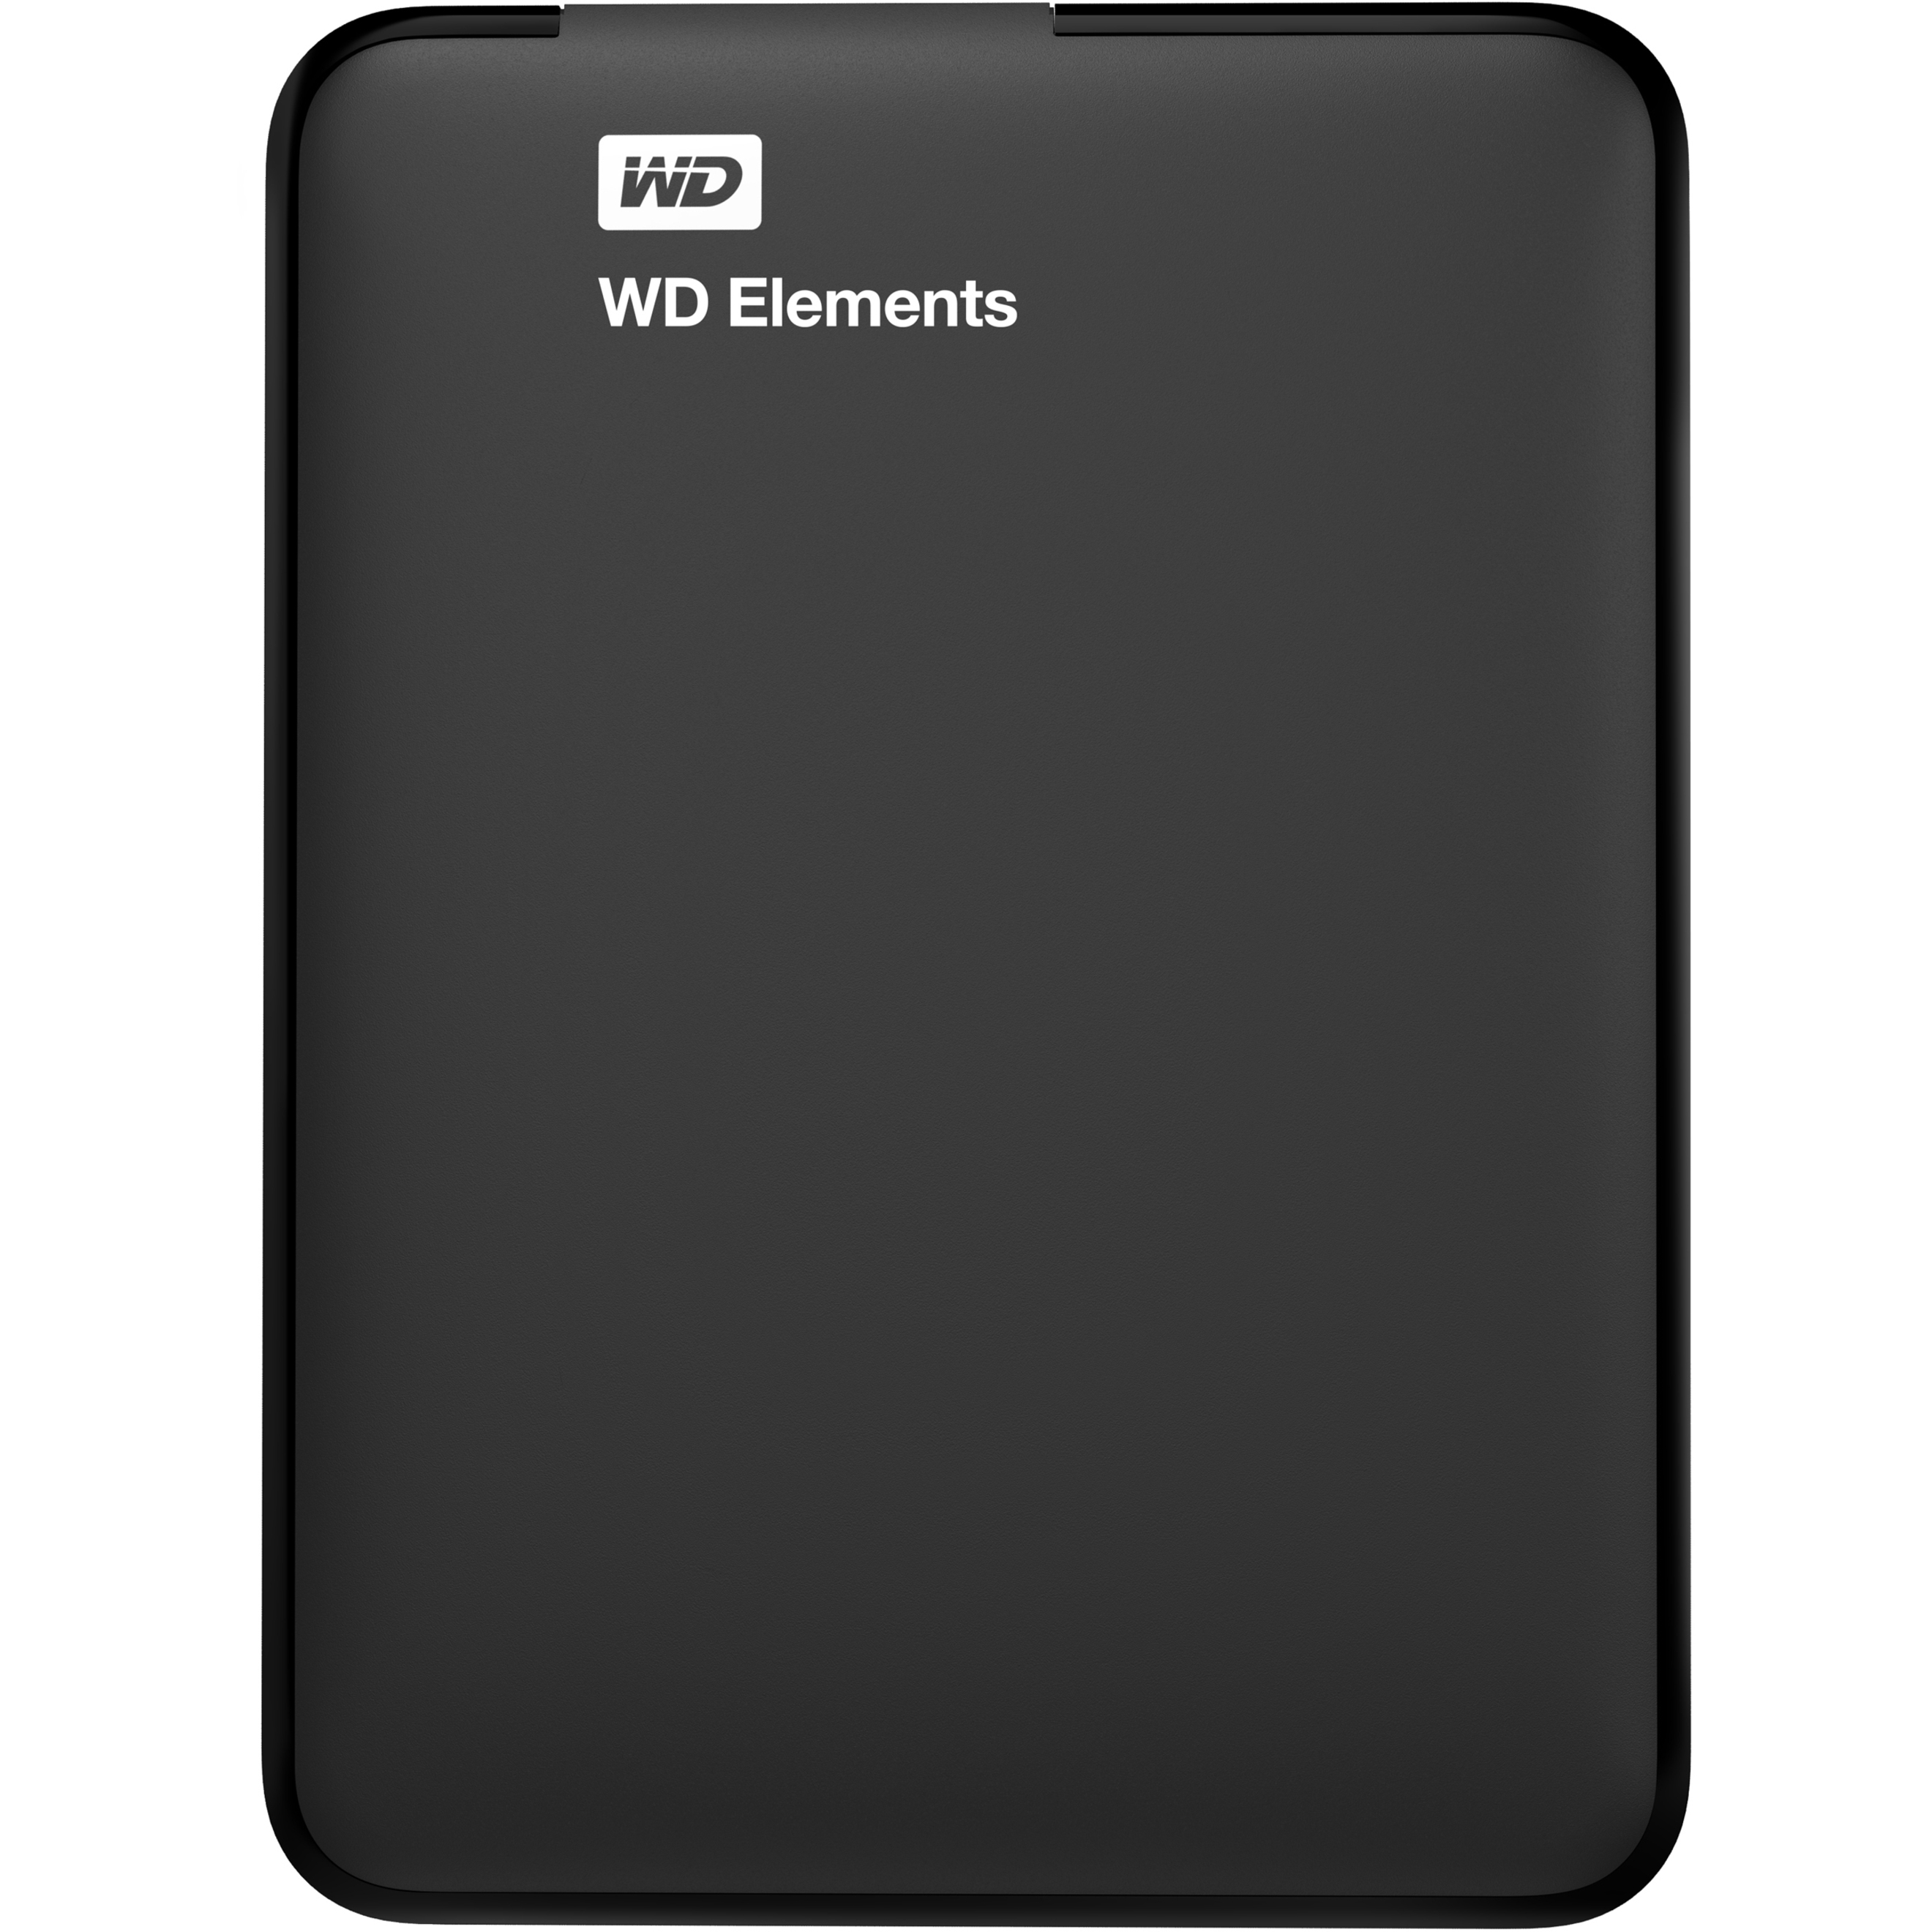 WD 1TB Elements Portable External Hard Drive - USB 3.0 - WDBUZG0010BBK-NESN - image 3 of 4